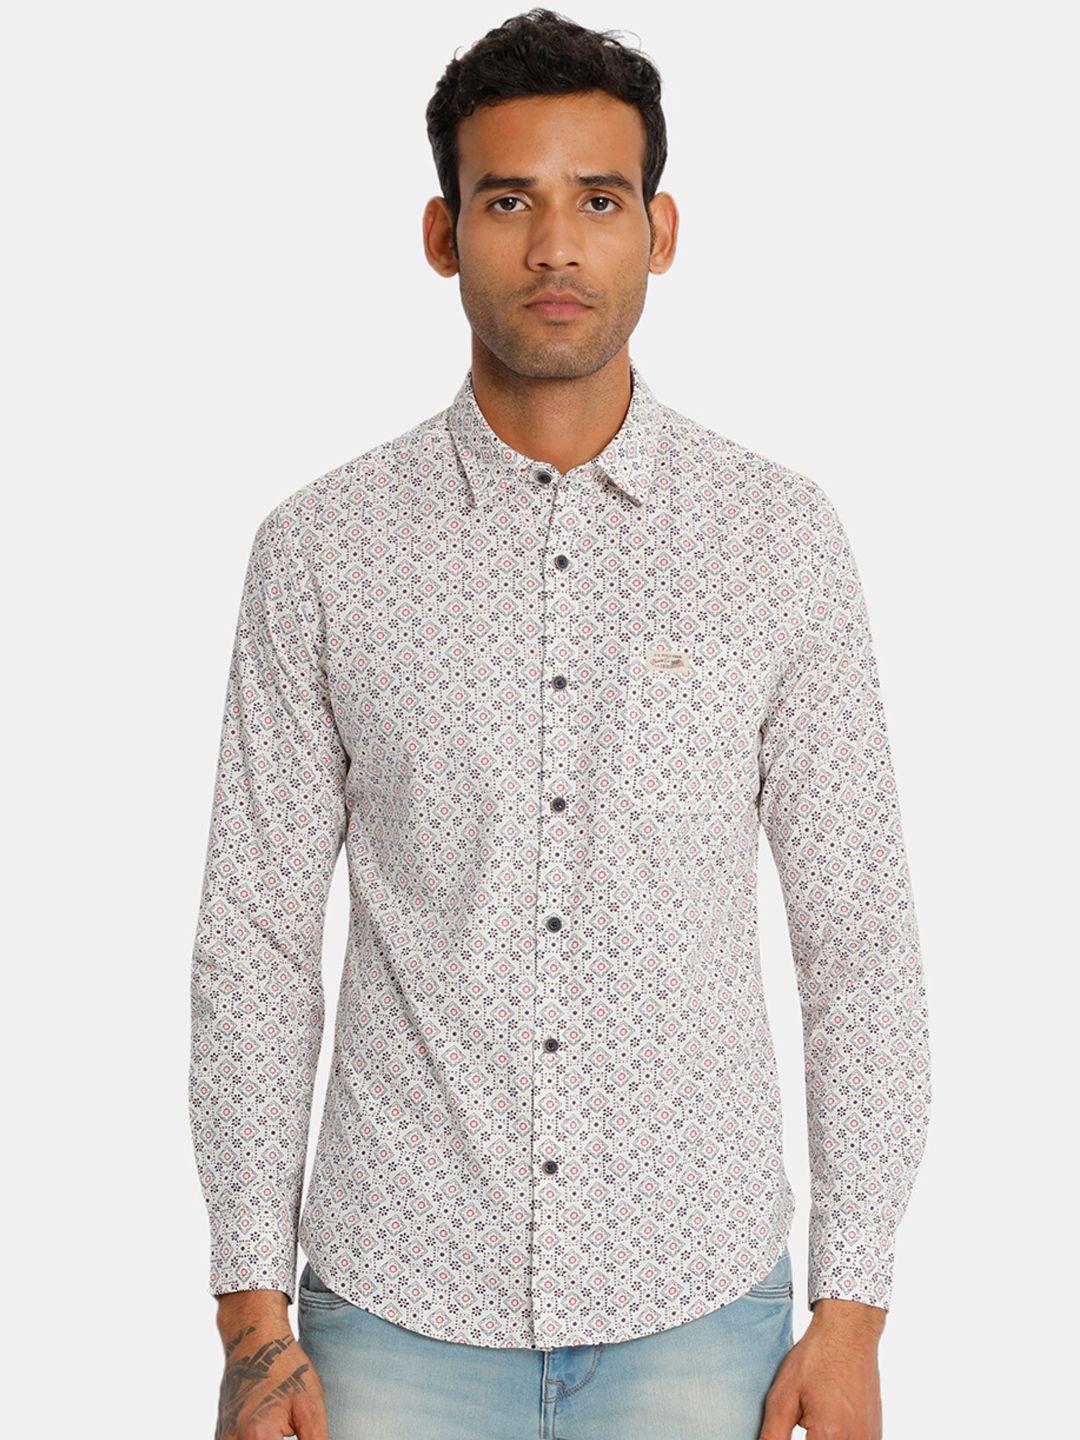 u.s. polo assn. denim co. men off-white regular fit printed casual shirt